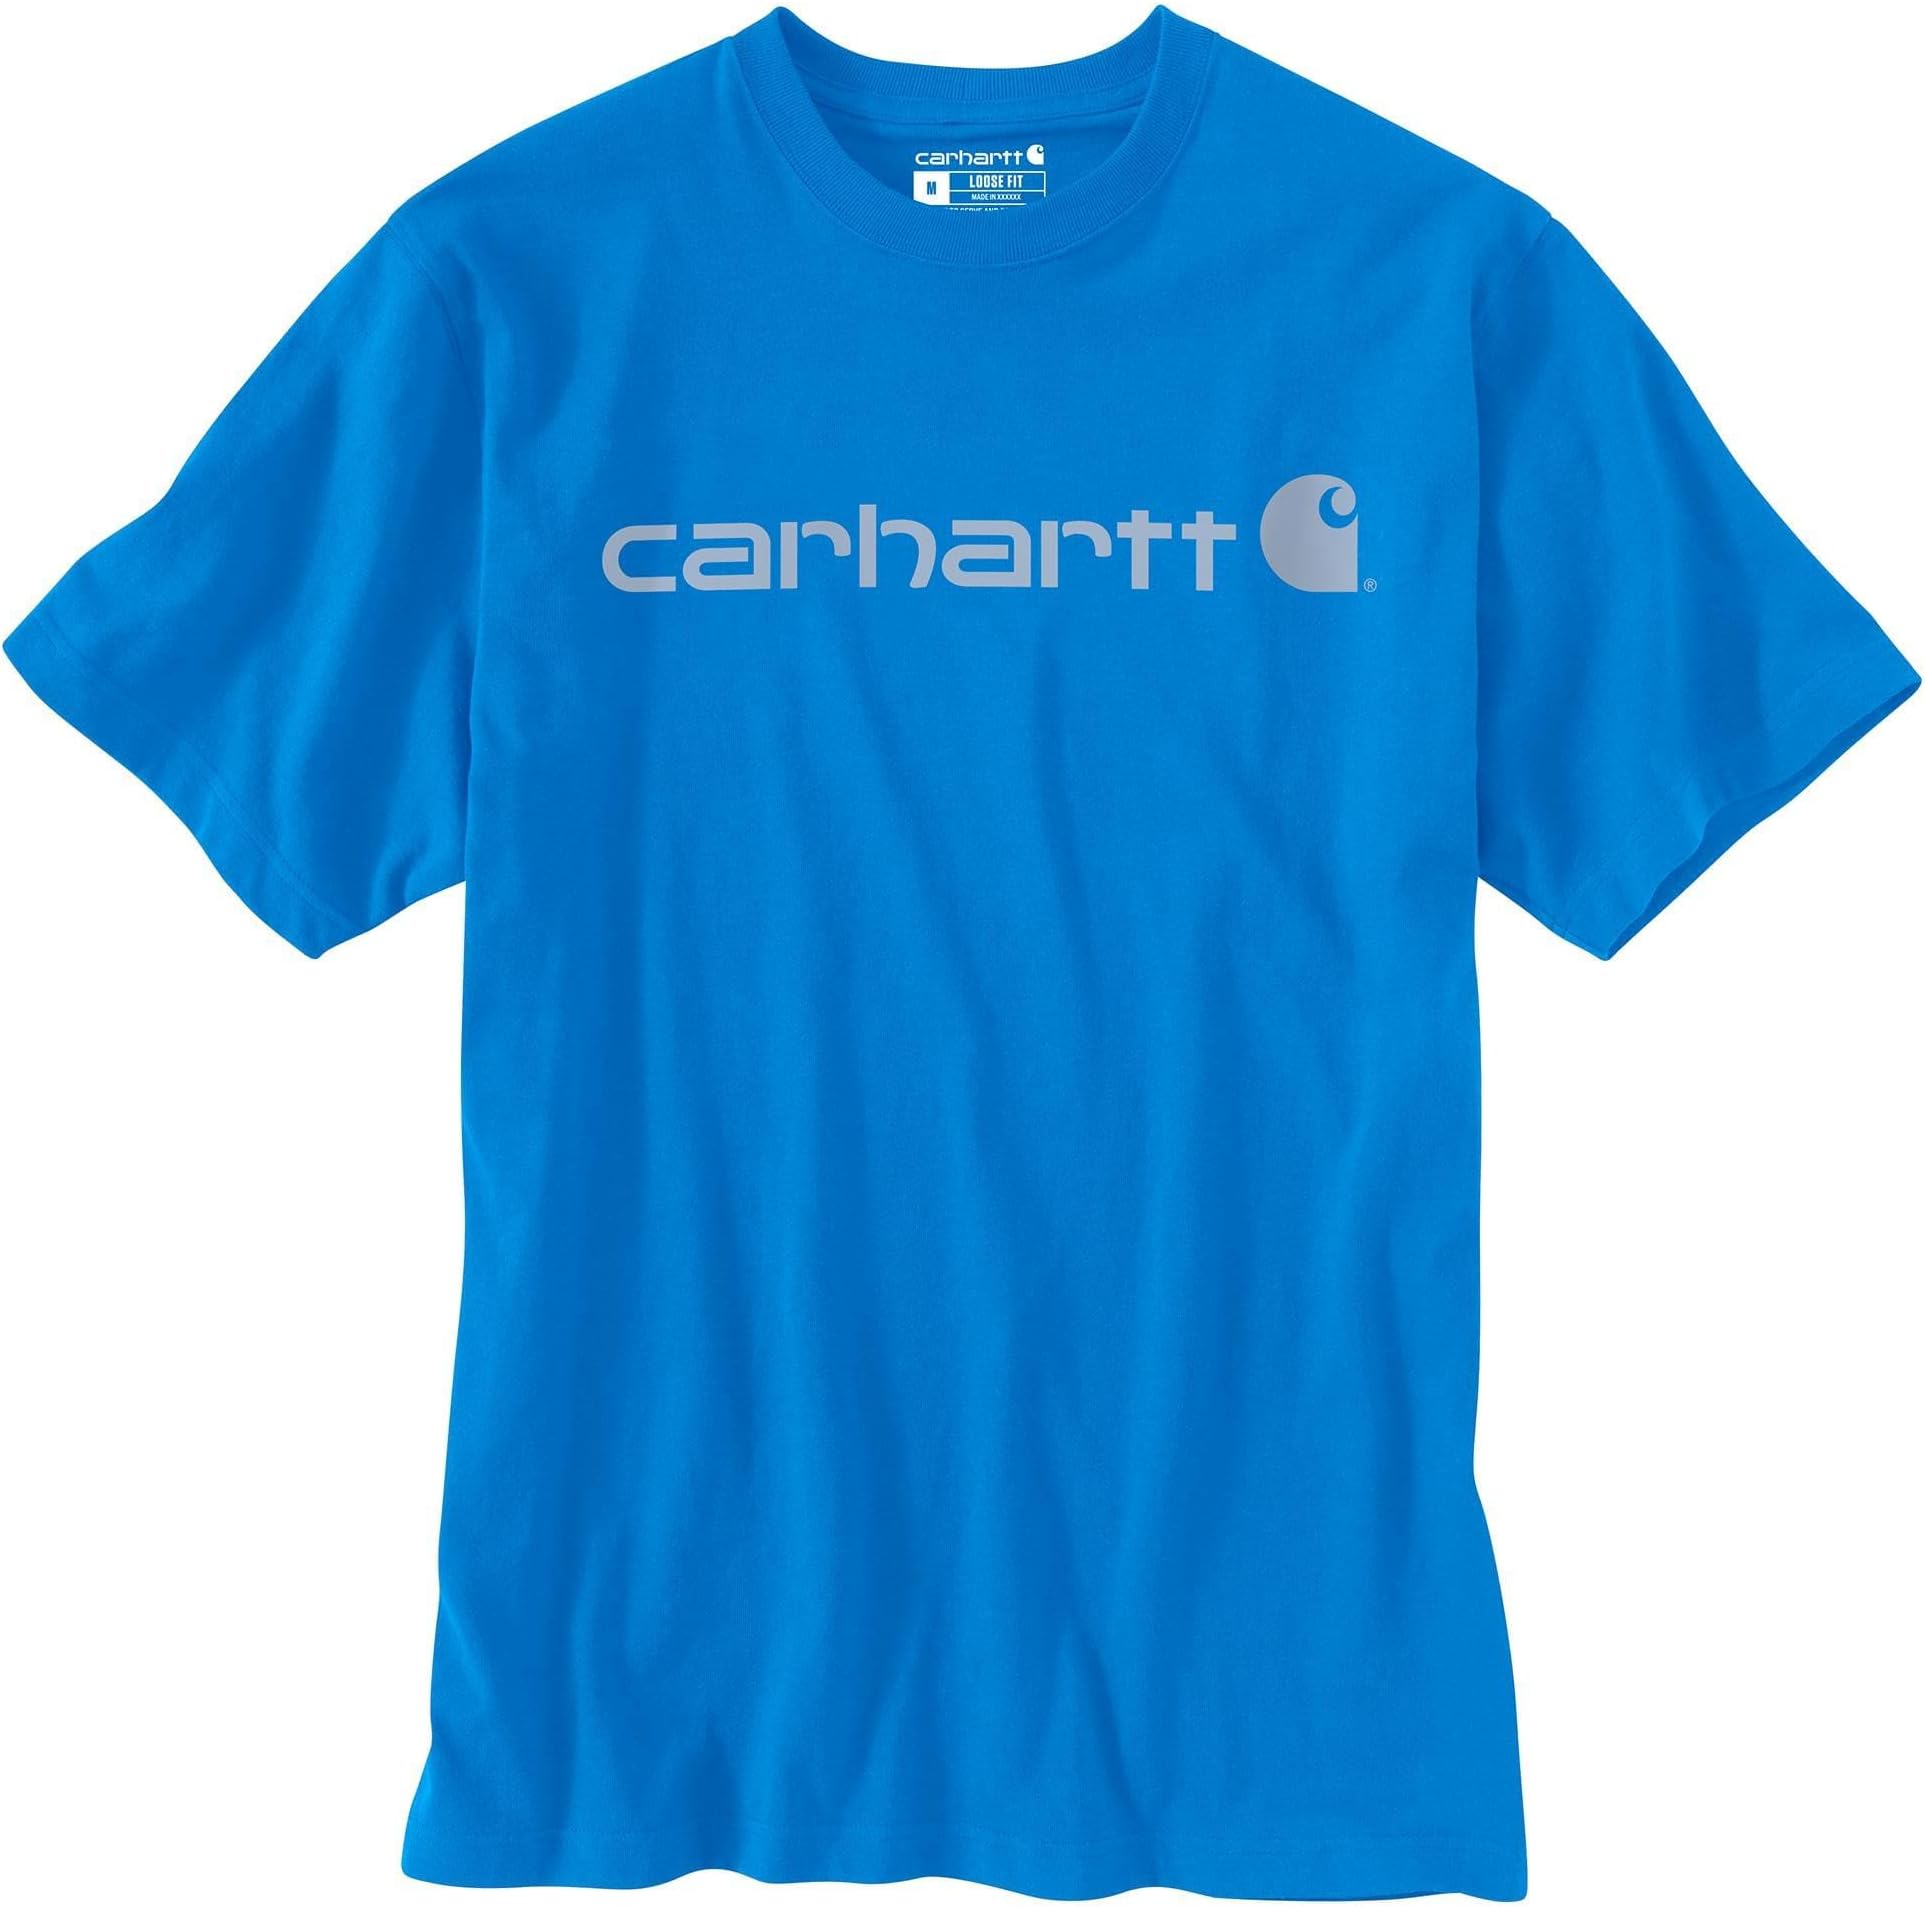 Футболка с фирменным логотипом (S/S) Carhartt, цвет Blue Glow футболка с фирменным логотипом s s carhartt цвет marmalade heather